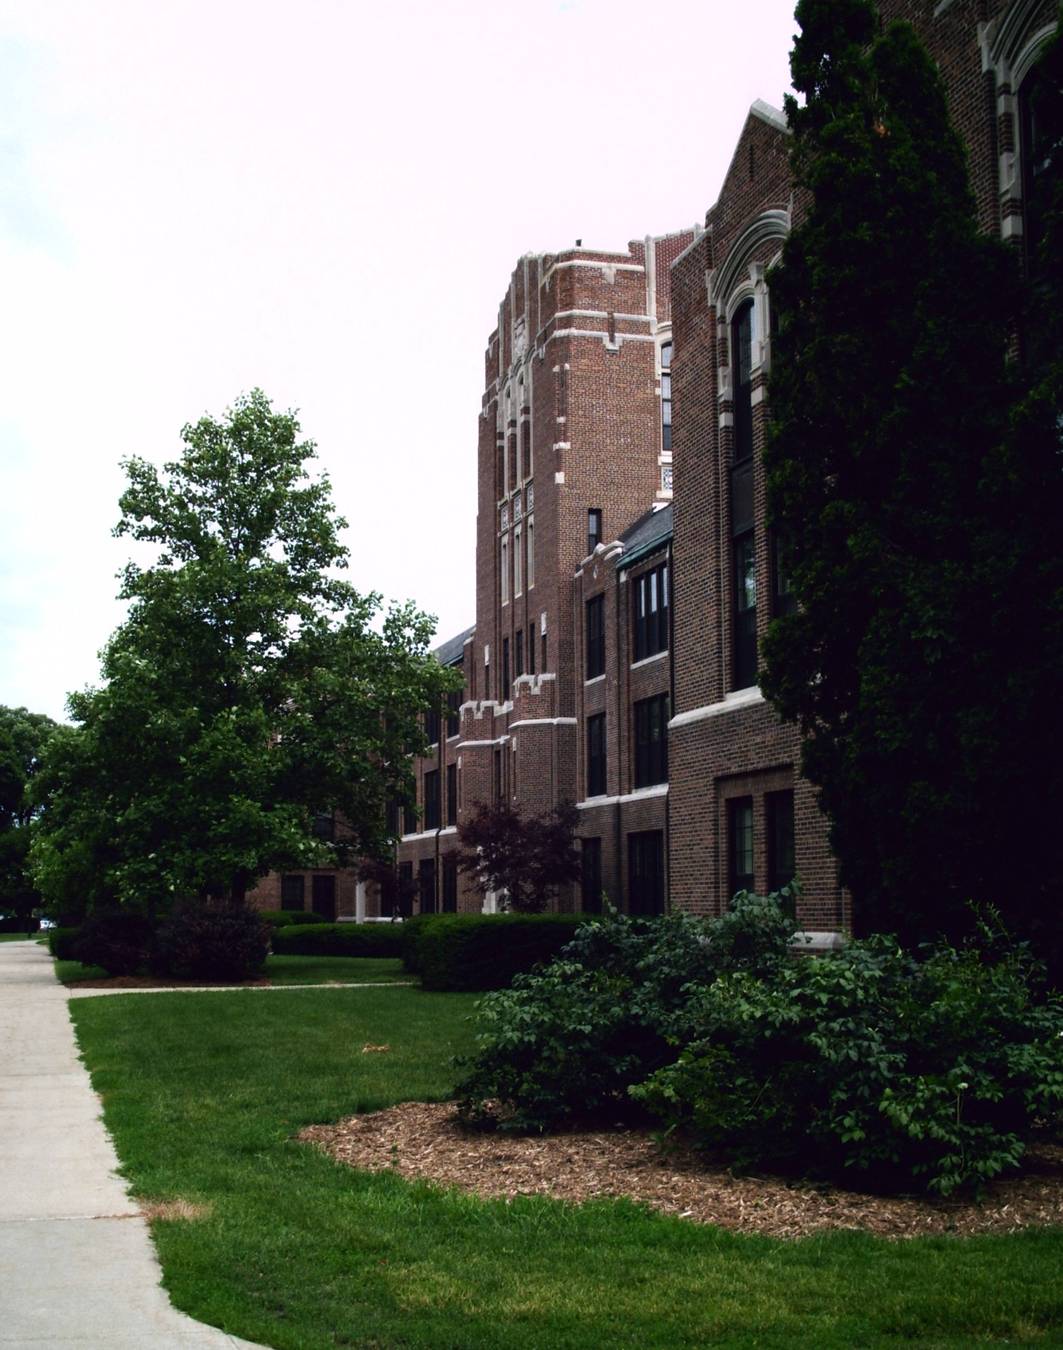 Mount Pleasant, MI: Central Michigan University's Warriner Hall